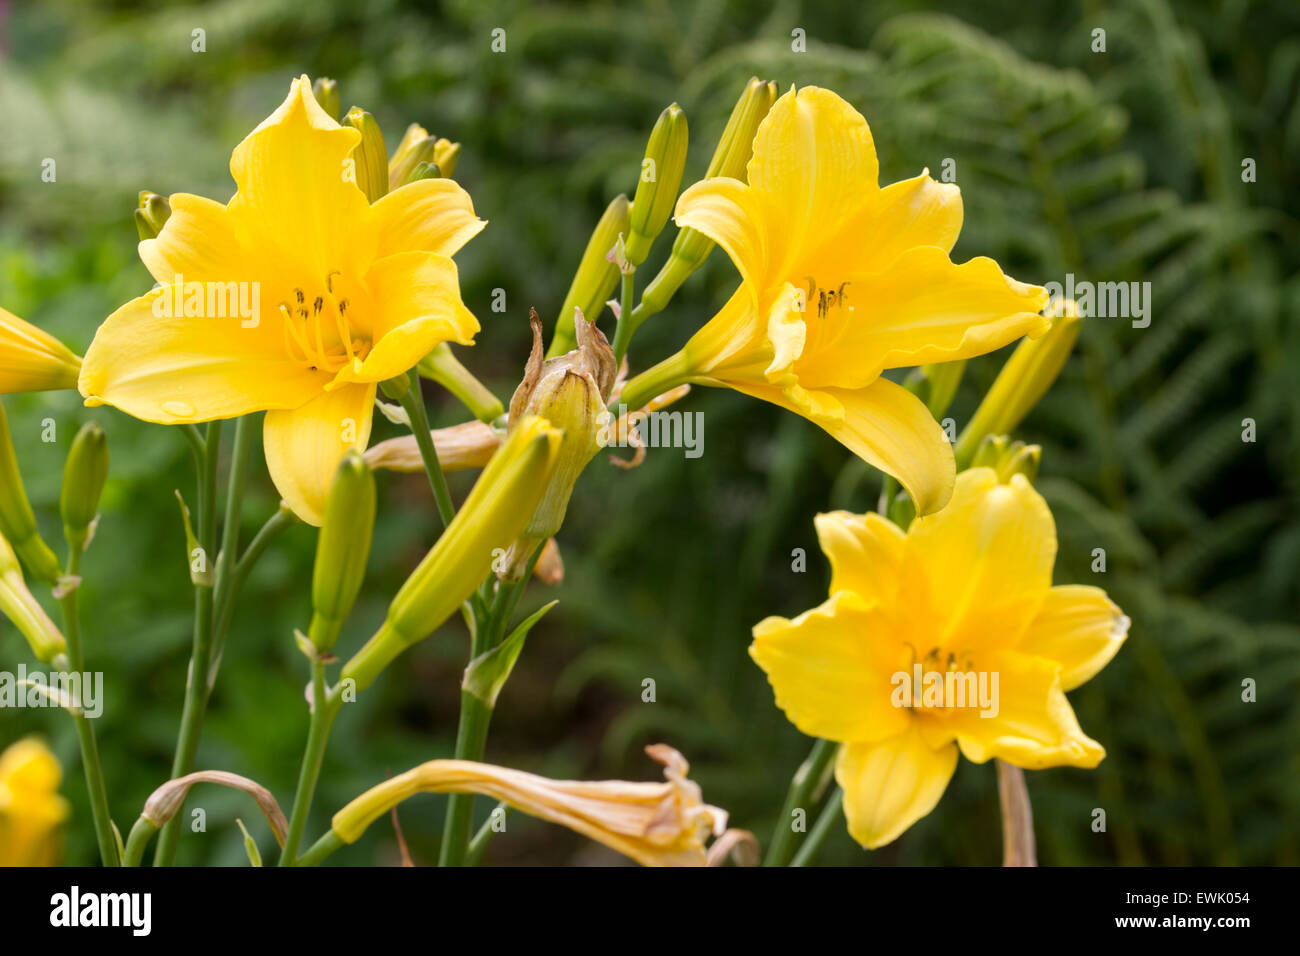 Flowers of the yellow daylily, Hemerocallis 'Purity' Stock Photo